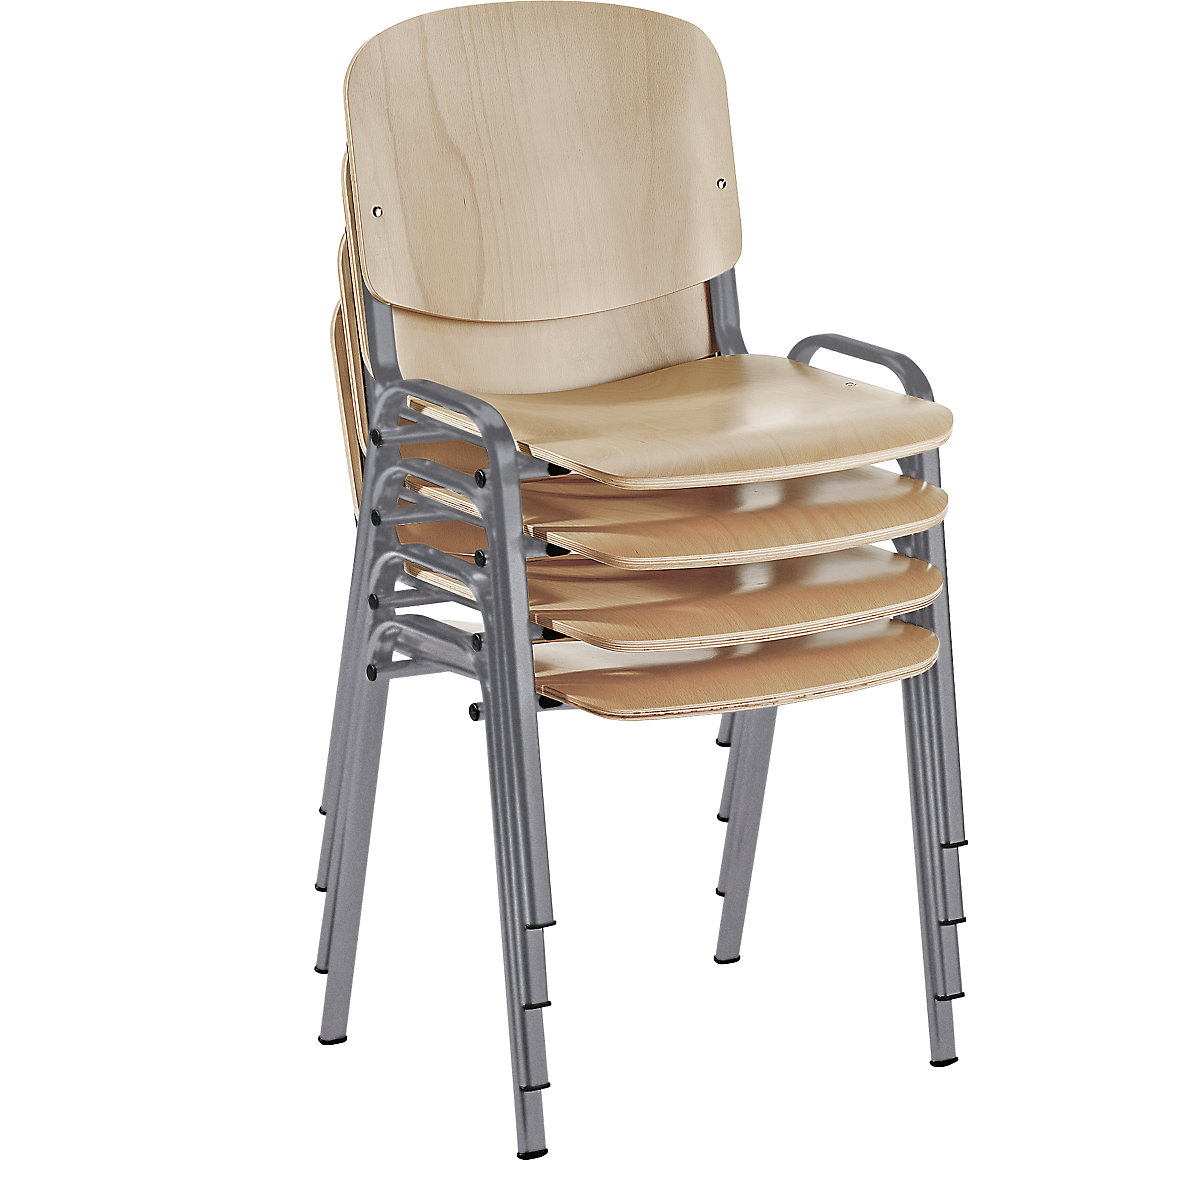 Stacking chair, ergonomic shape